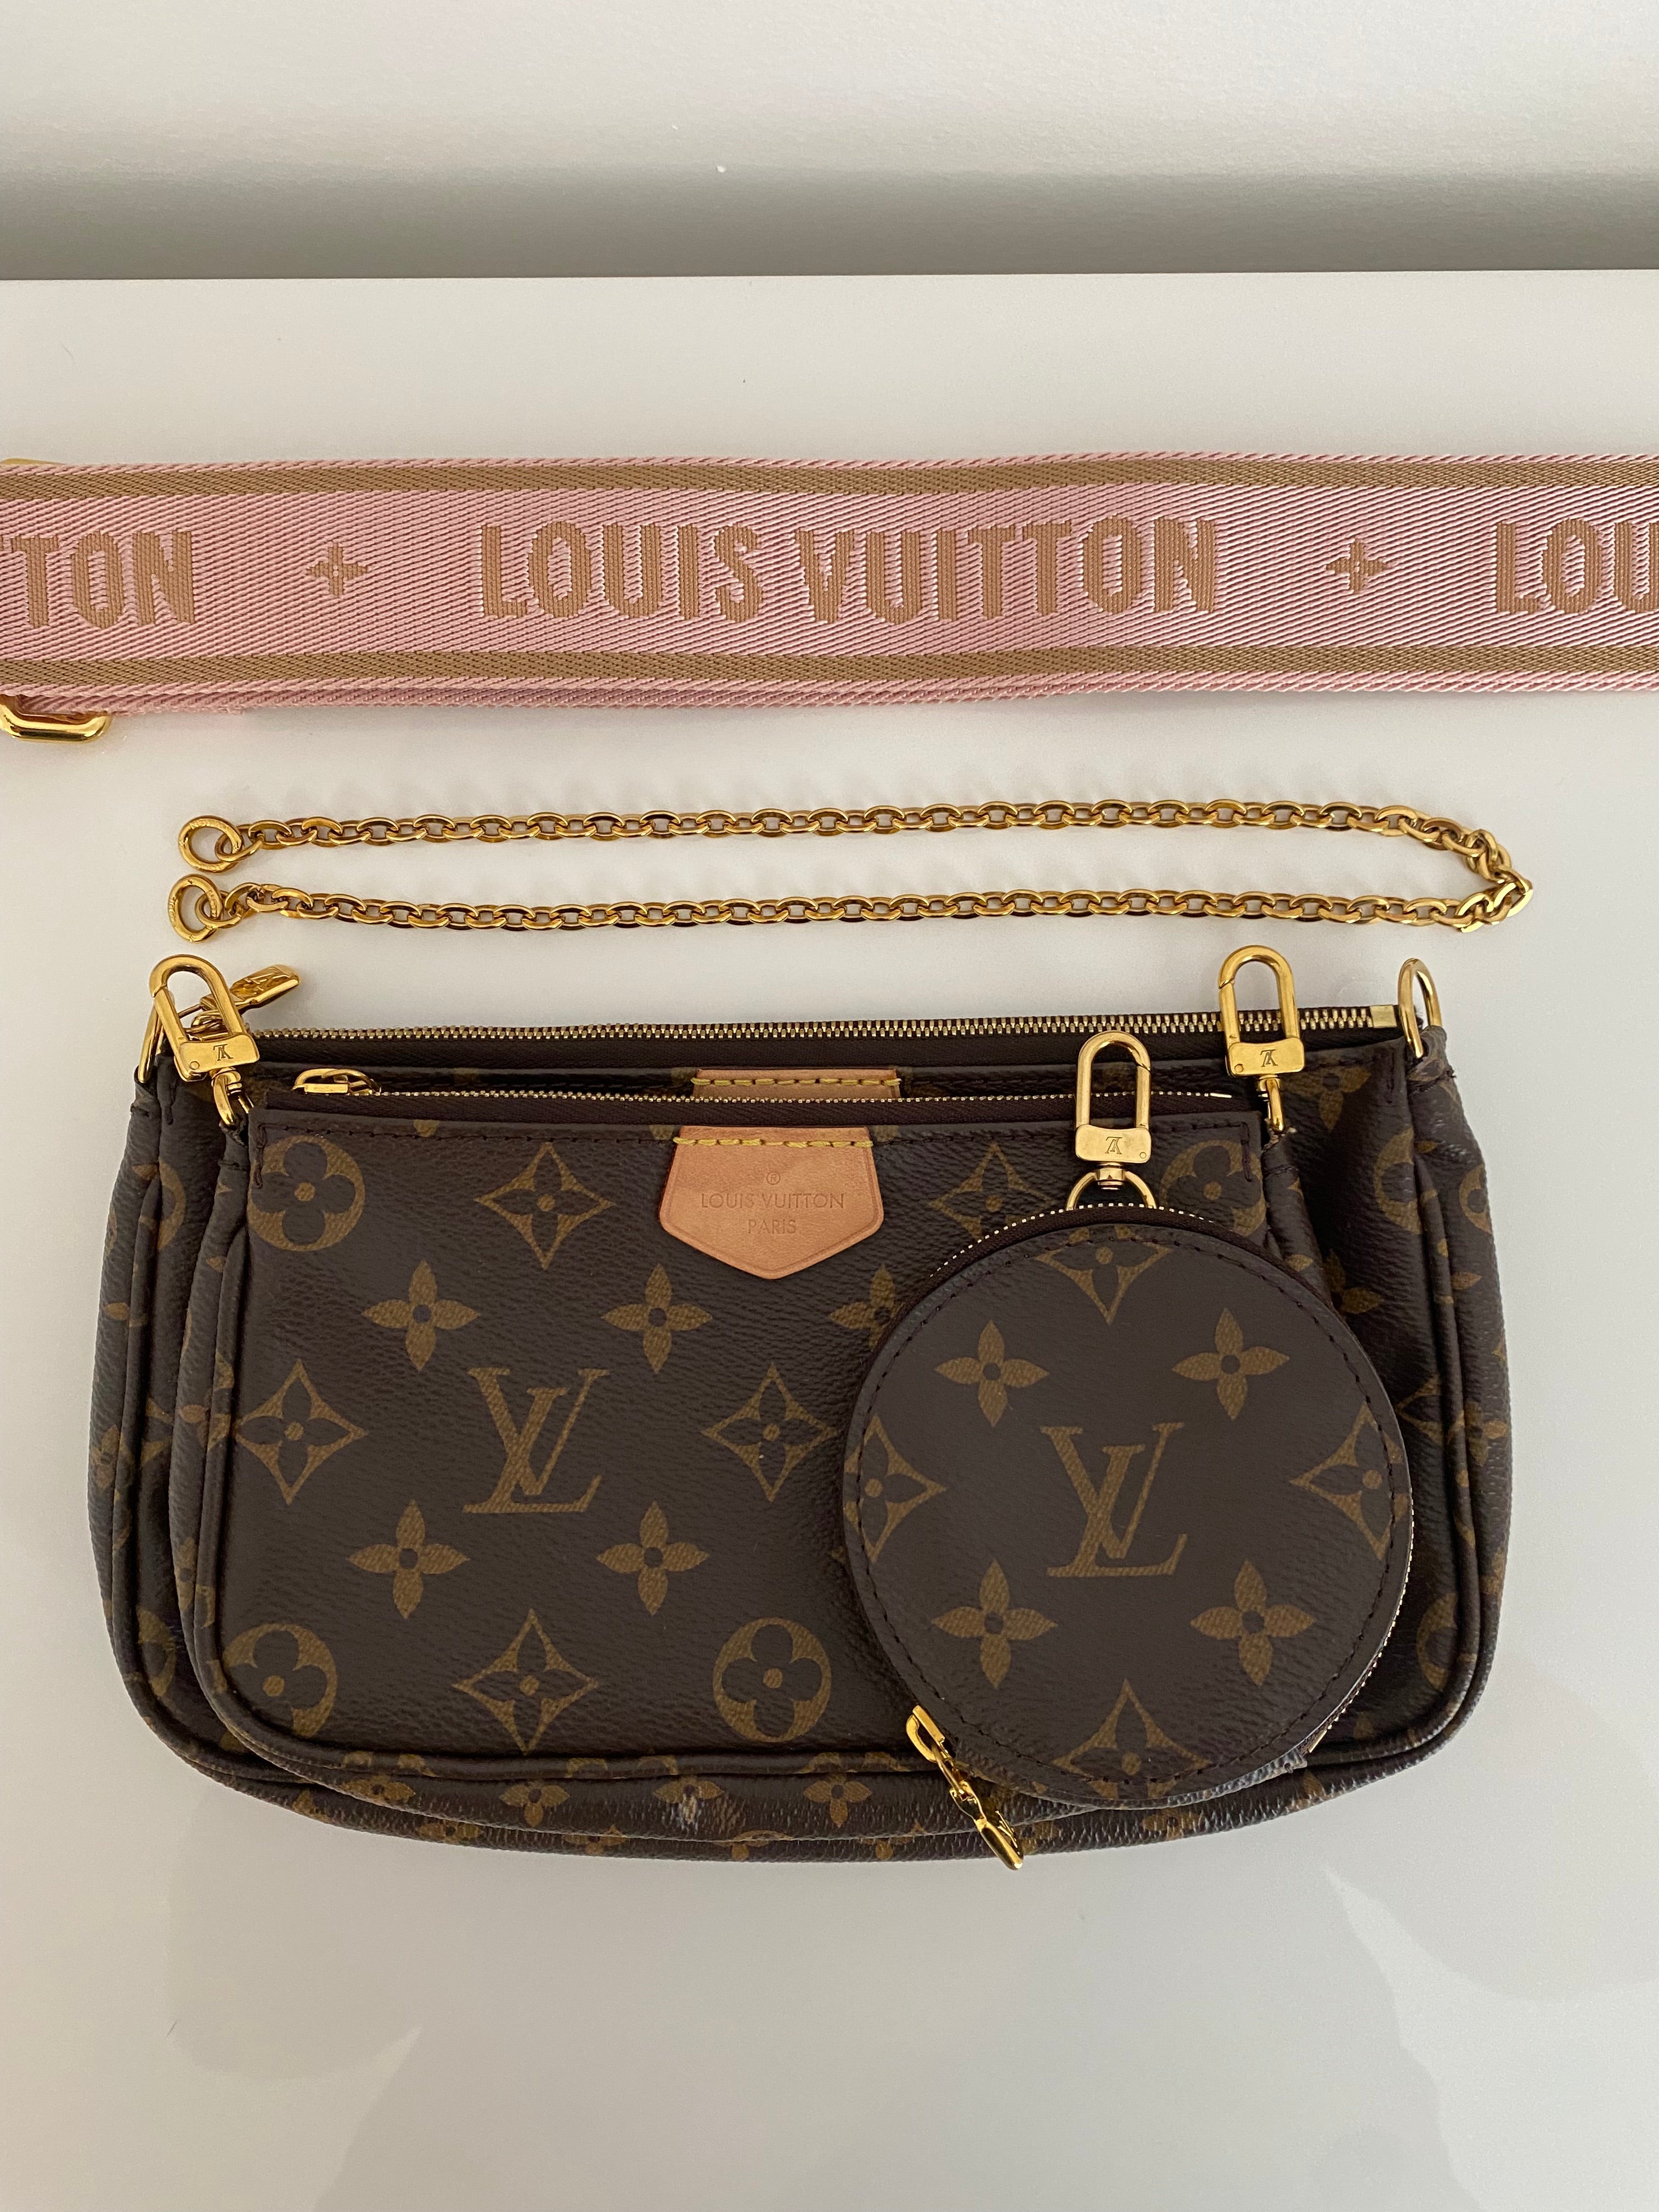 How To Style The Louis Vuitton Trendy Multi Pochette Accessories Handbag